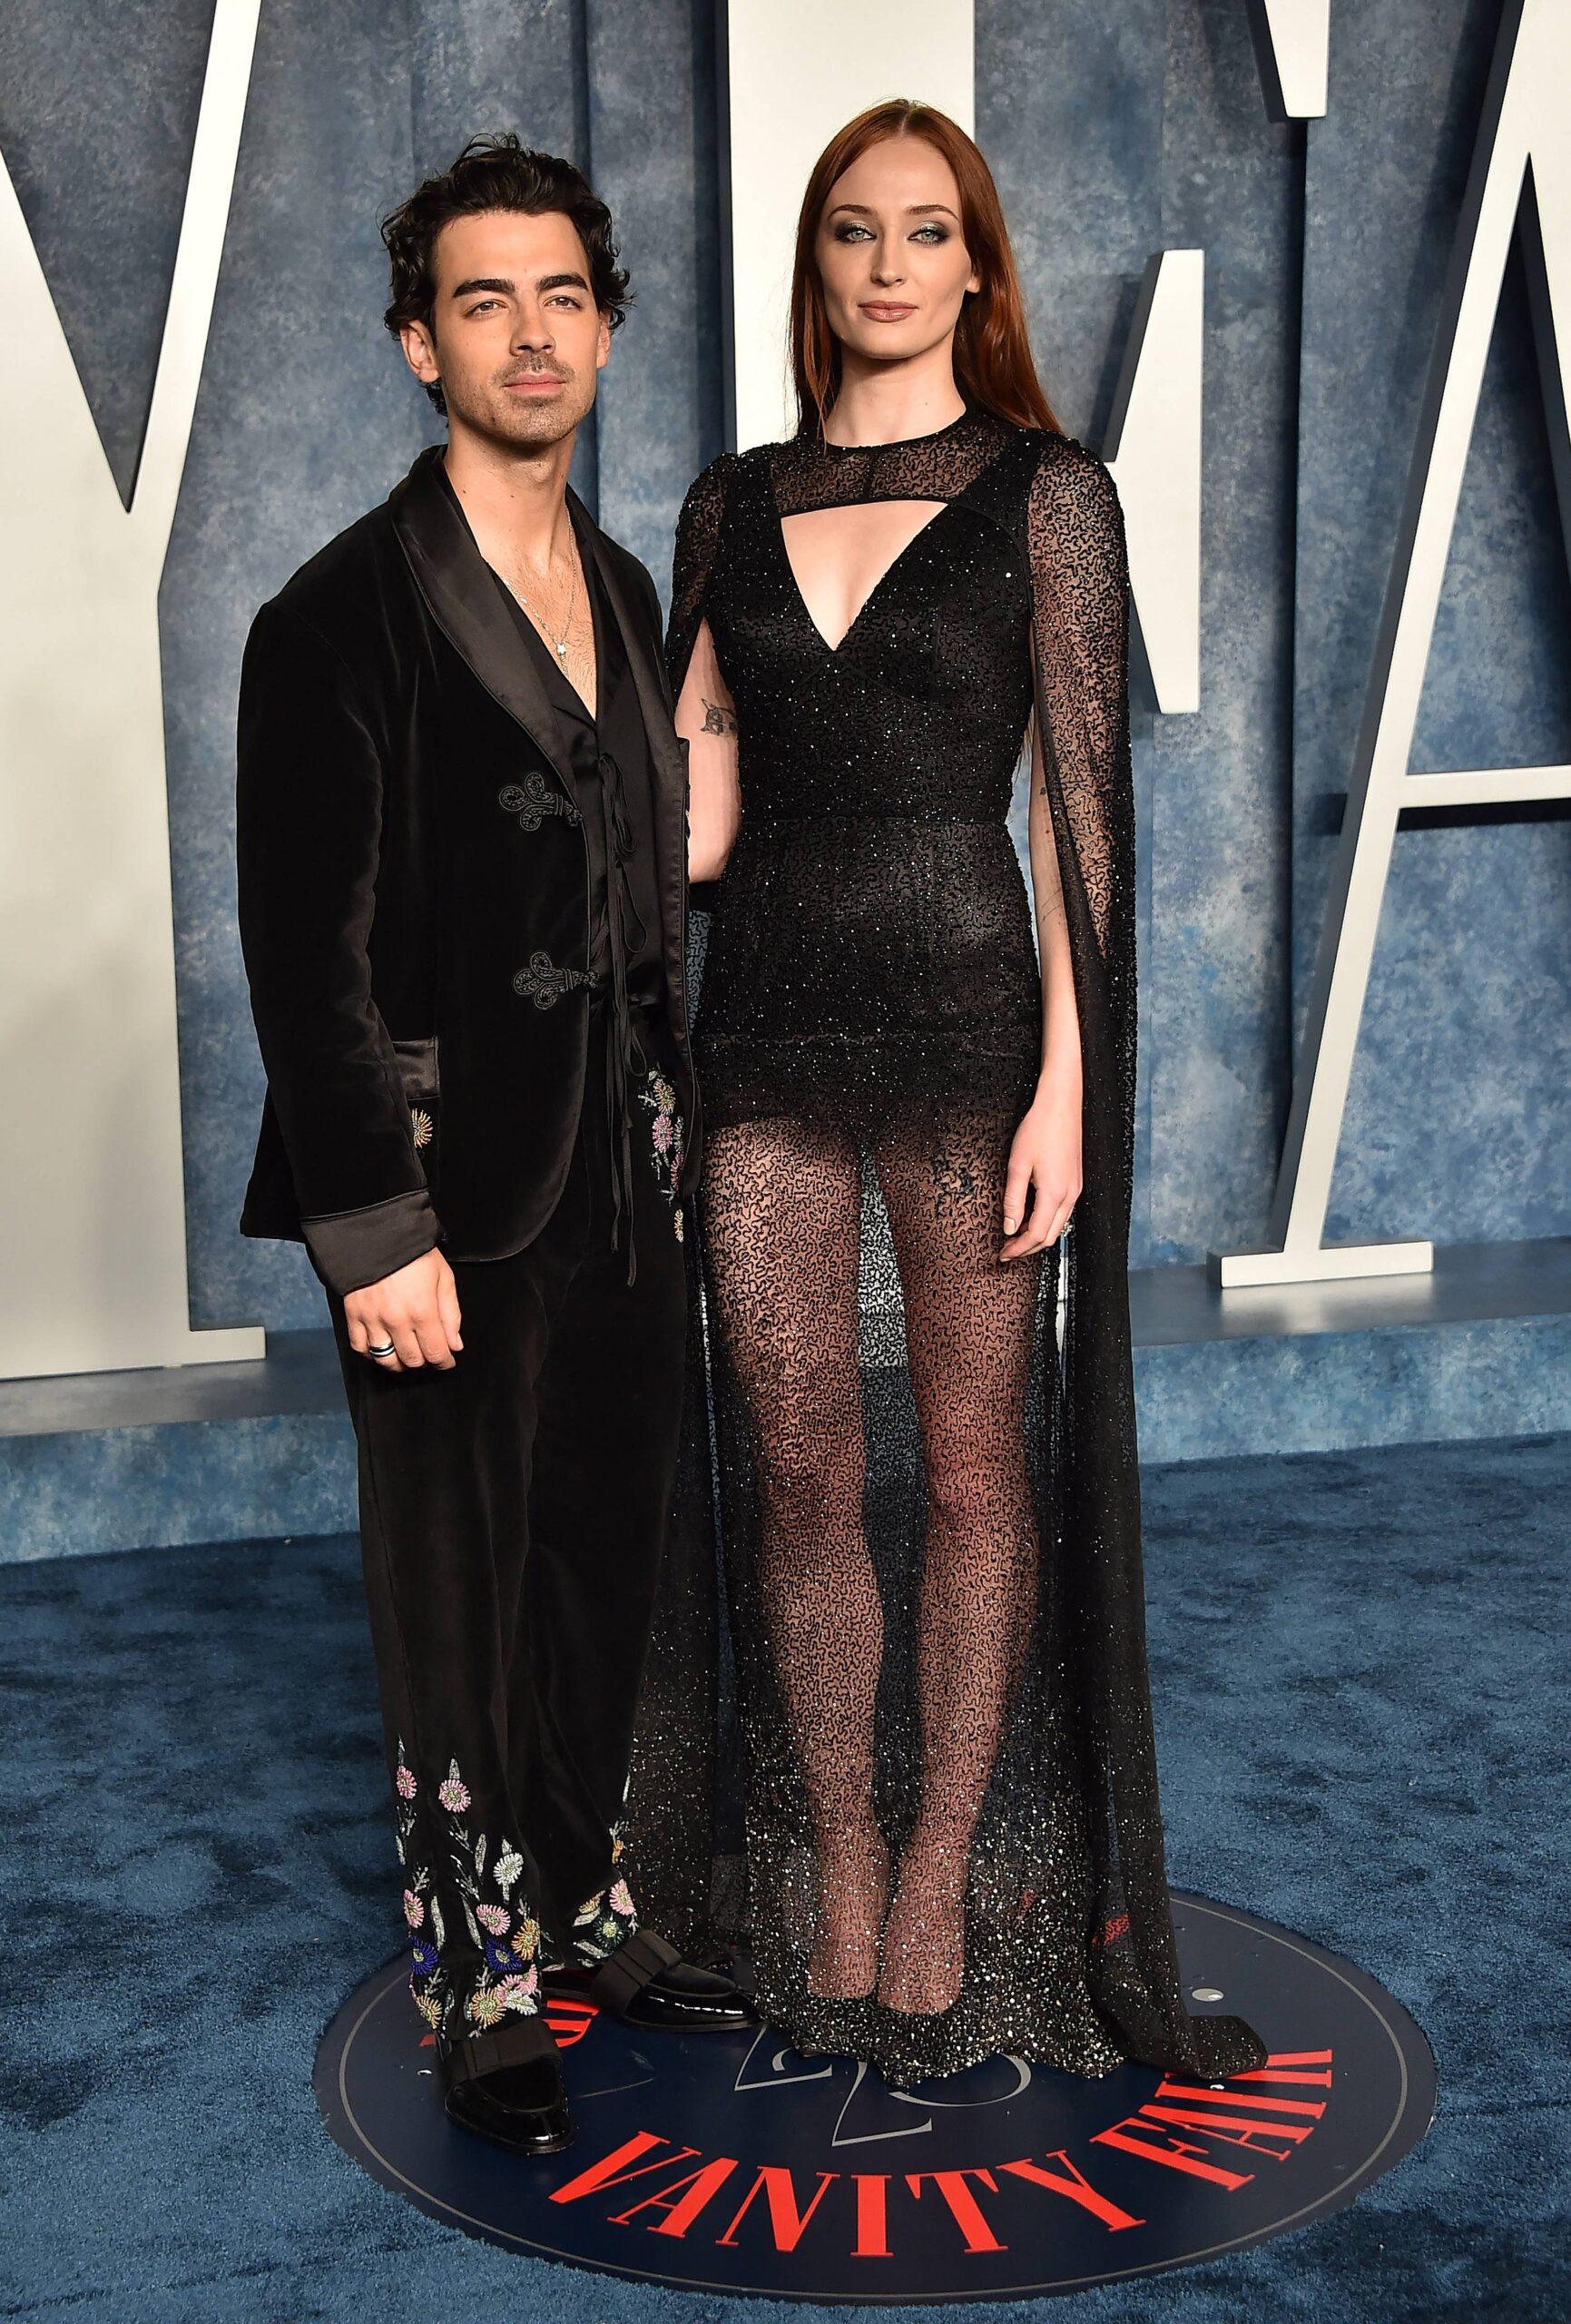 Joe Jonas and Sophie Turner at the Vanity Fair Oscar Party